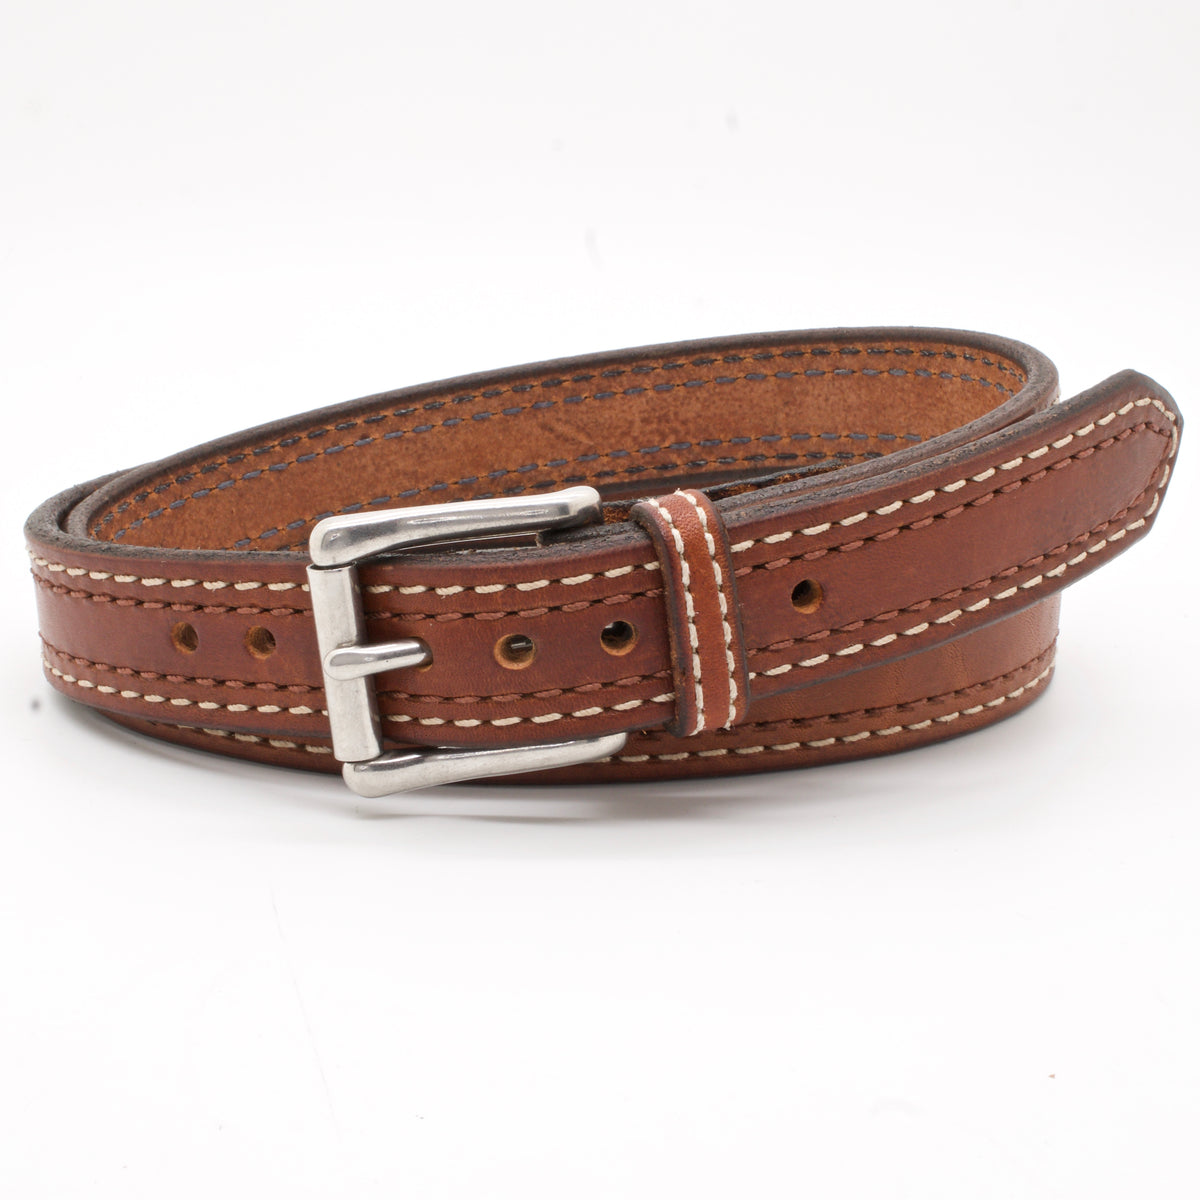 The MANHATTAN NARROW 1.25 Leather Belt